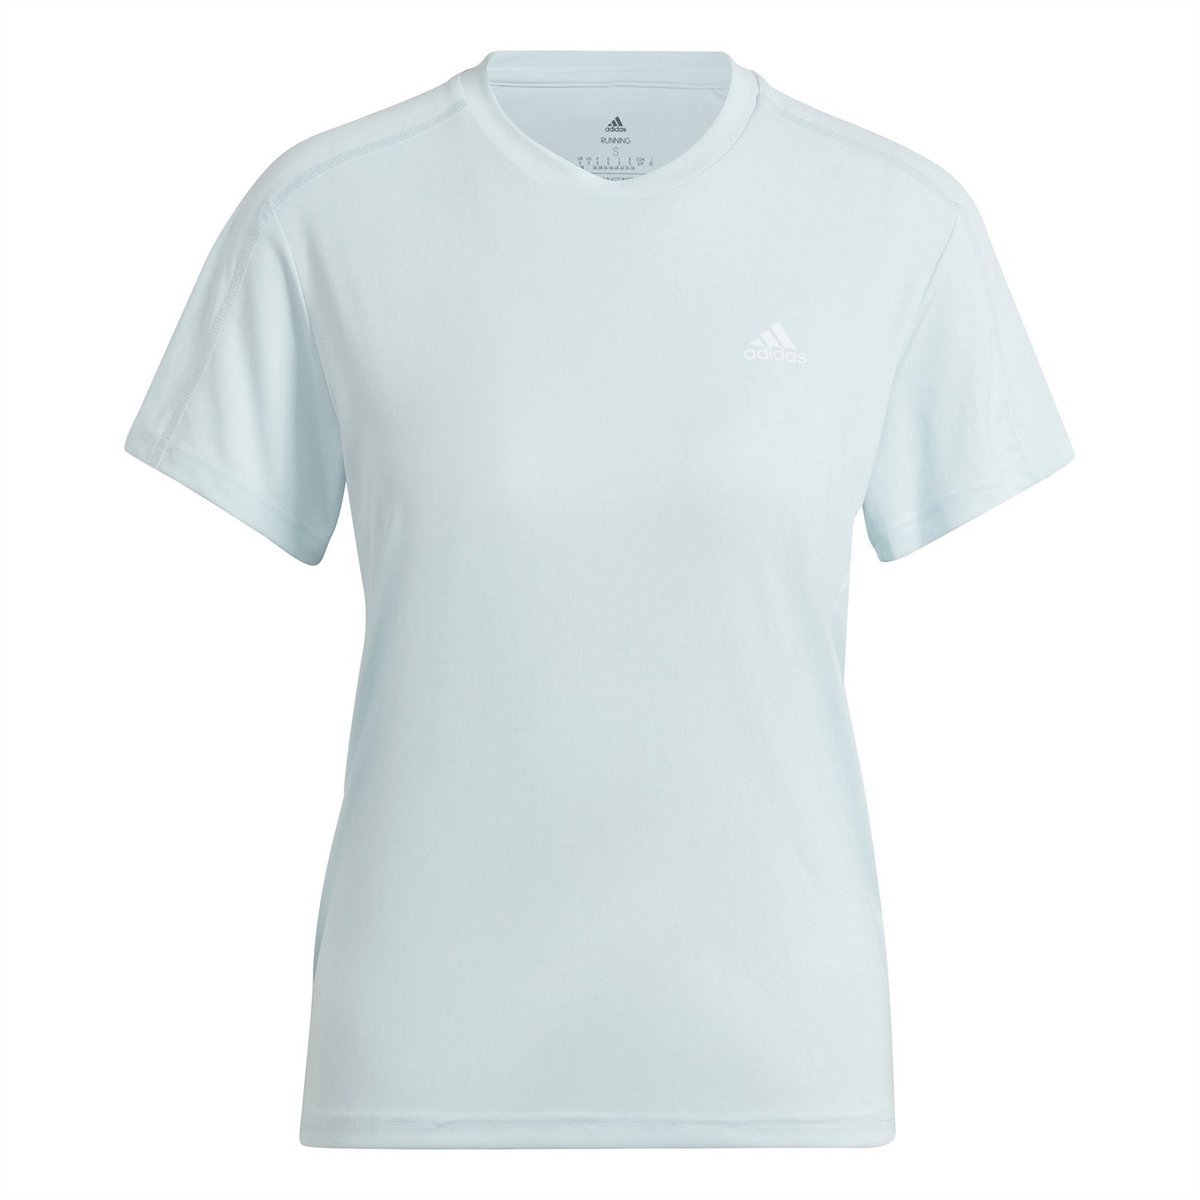 Women's Gym Tops & T-shirts